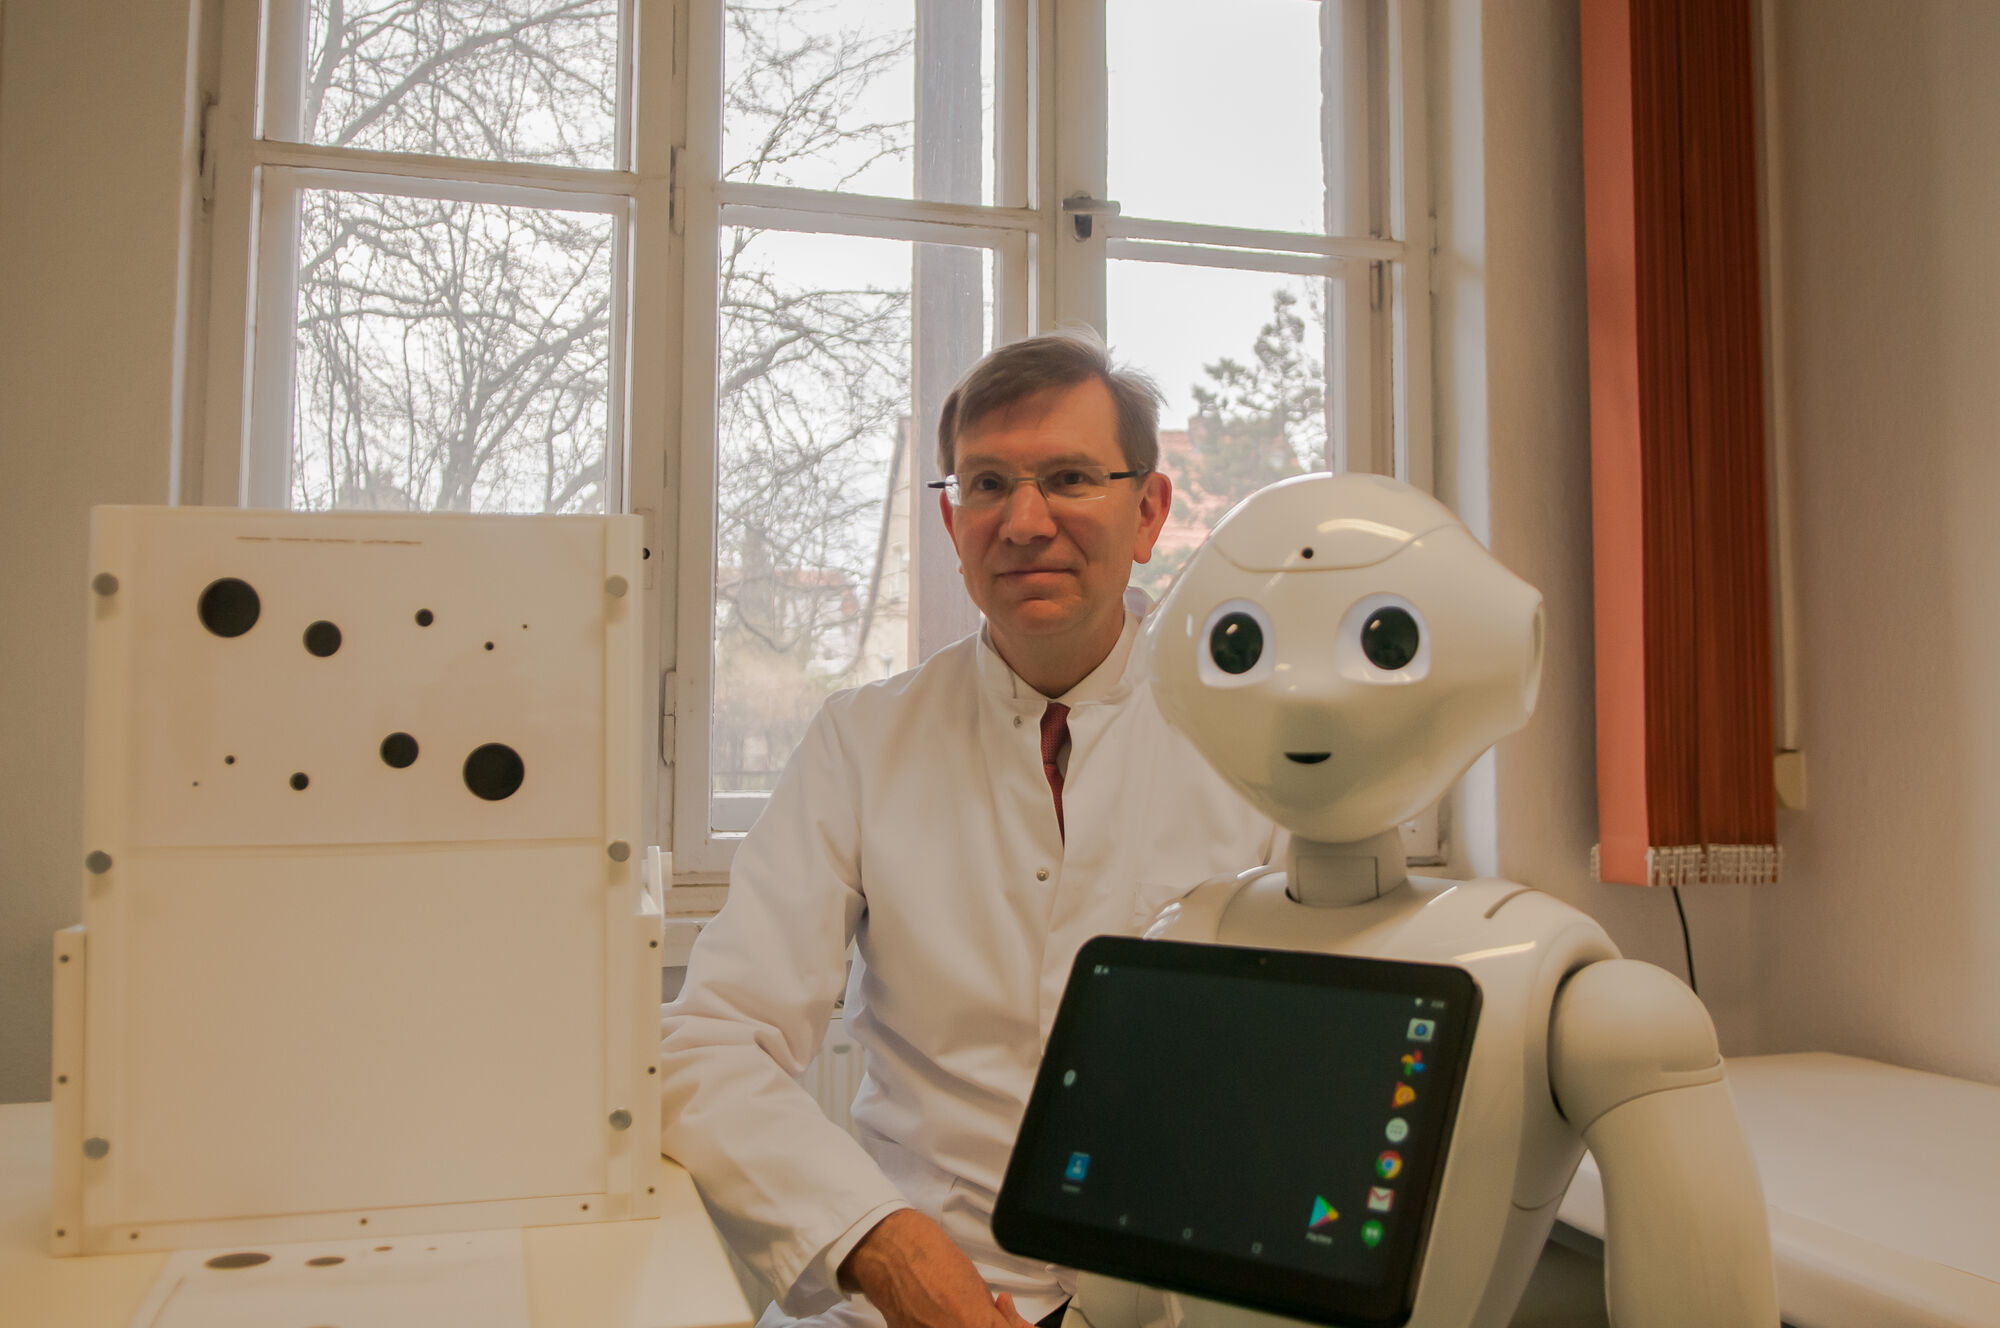 Prof. Dr. Thomas Platz and a humanoid robot, © Laura Schirrmeister, 2021